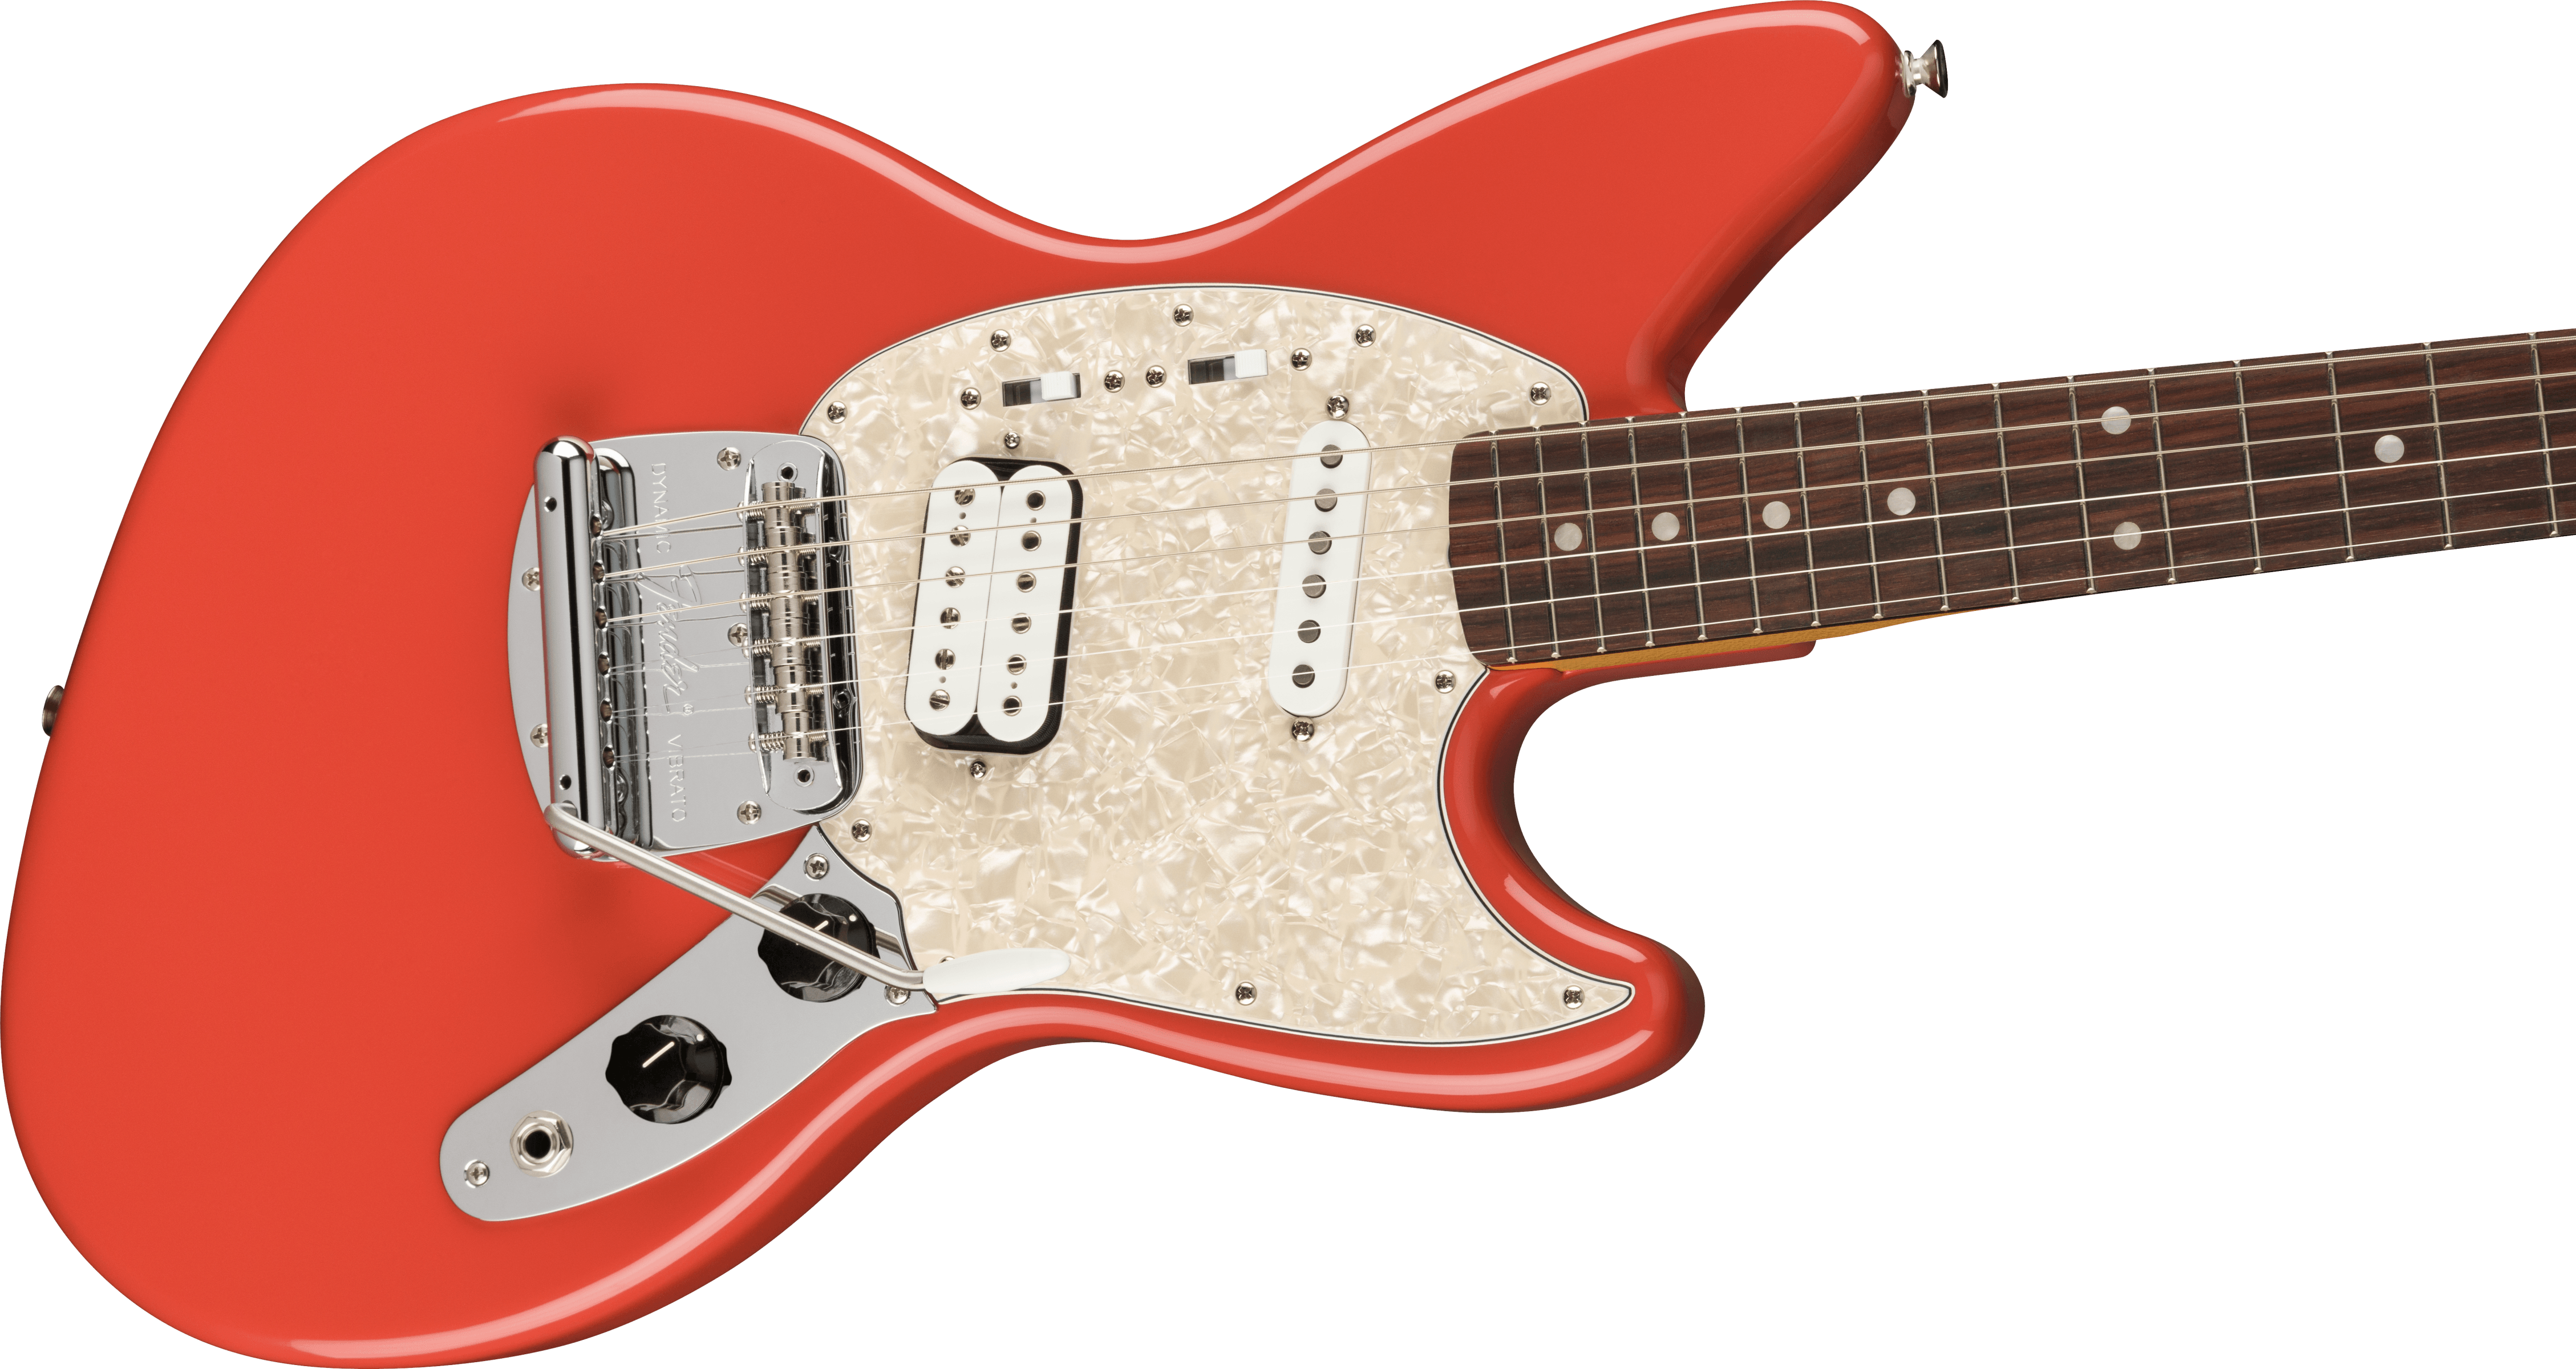 Fender Jag-stang Kurt Cobain Artist Hs Trem Rw - Fiesta Red - Retro-rock elektrische gitaar - Variation 3